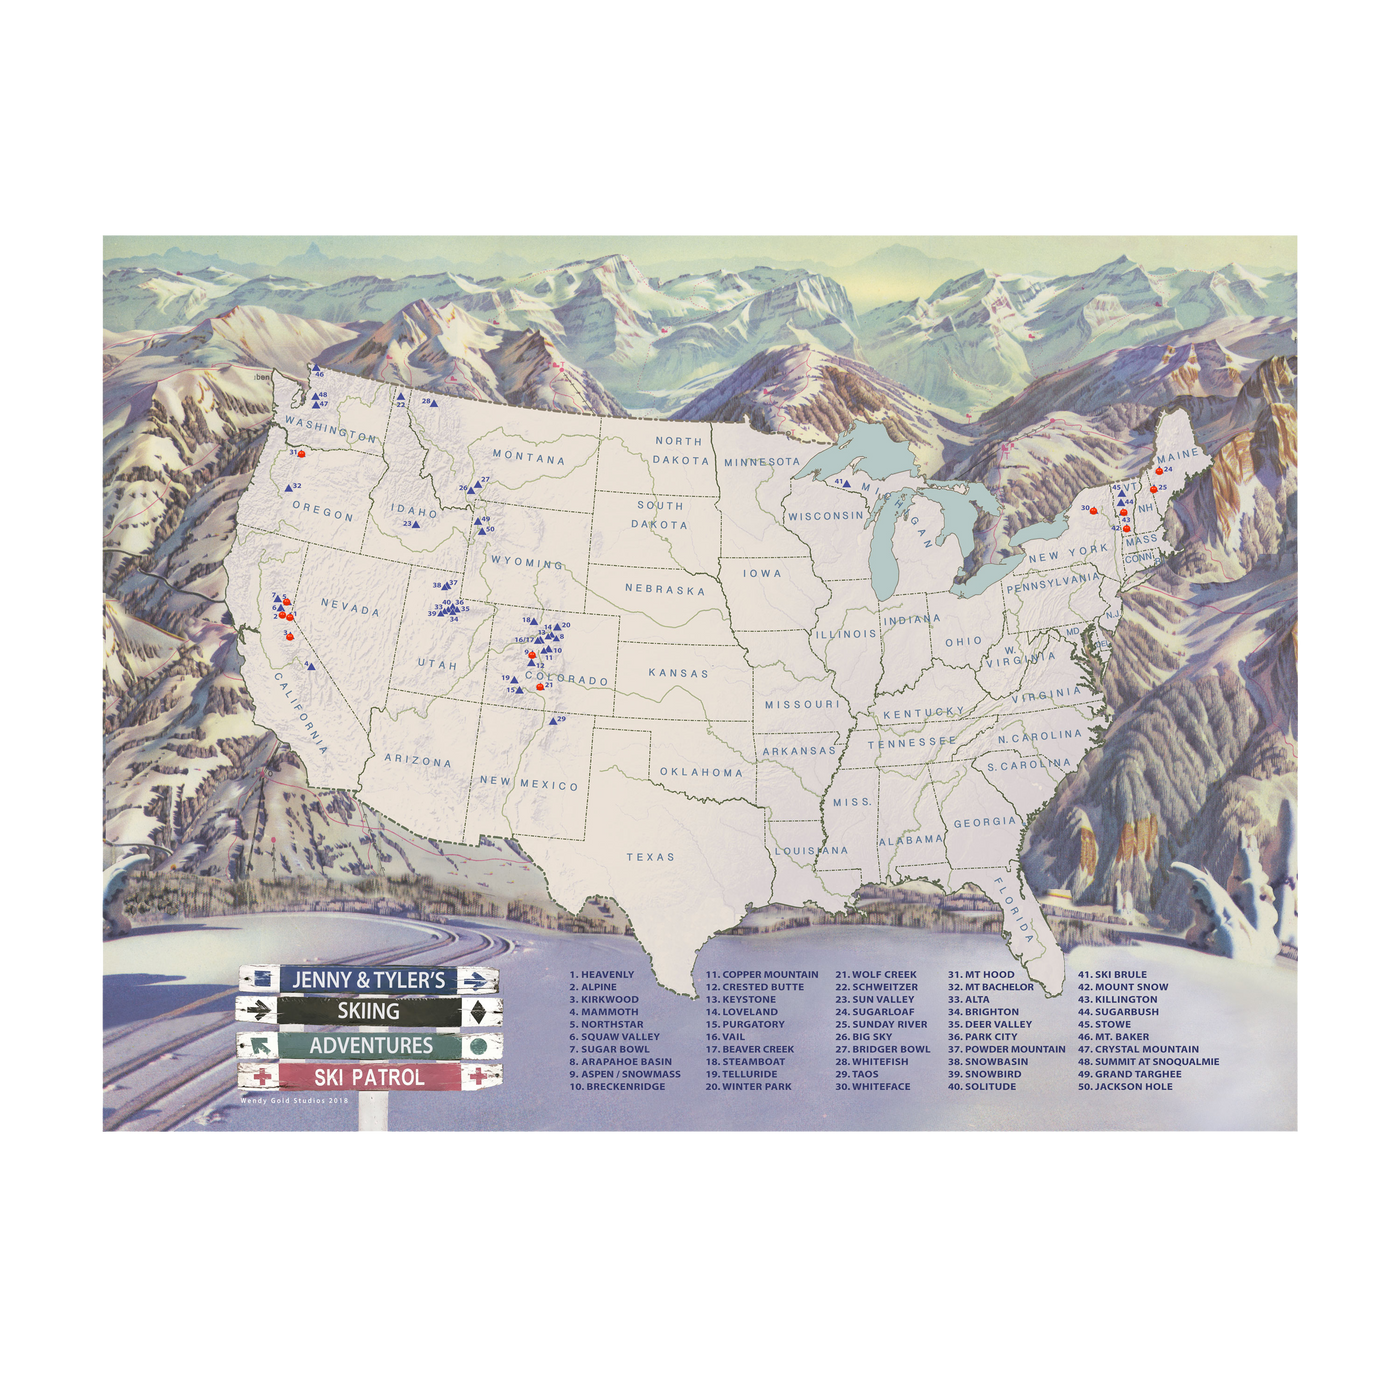 Scratch-Off Top 50 USA Ski Resorts Map – McSenderson